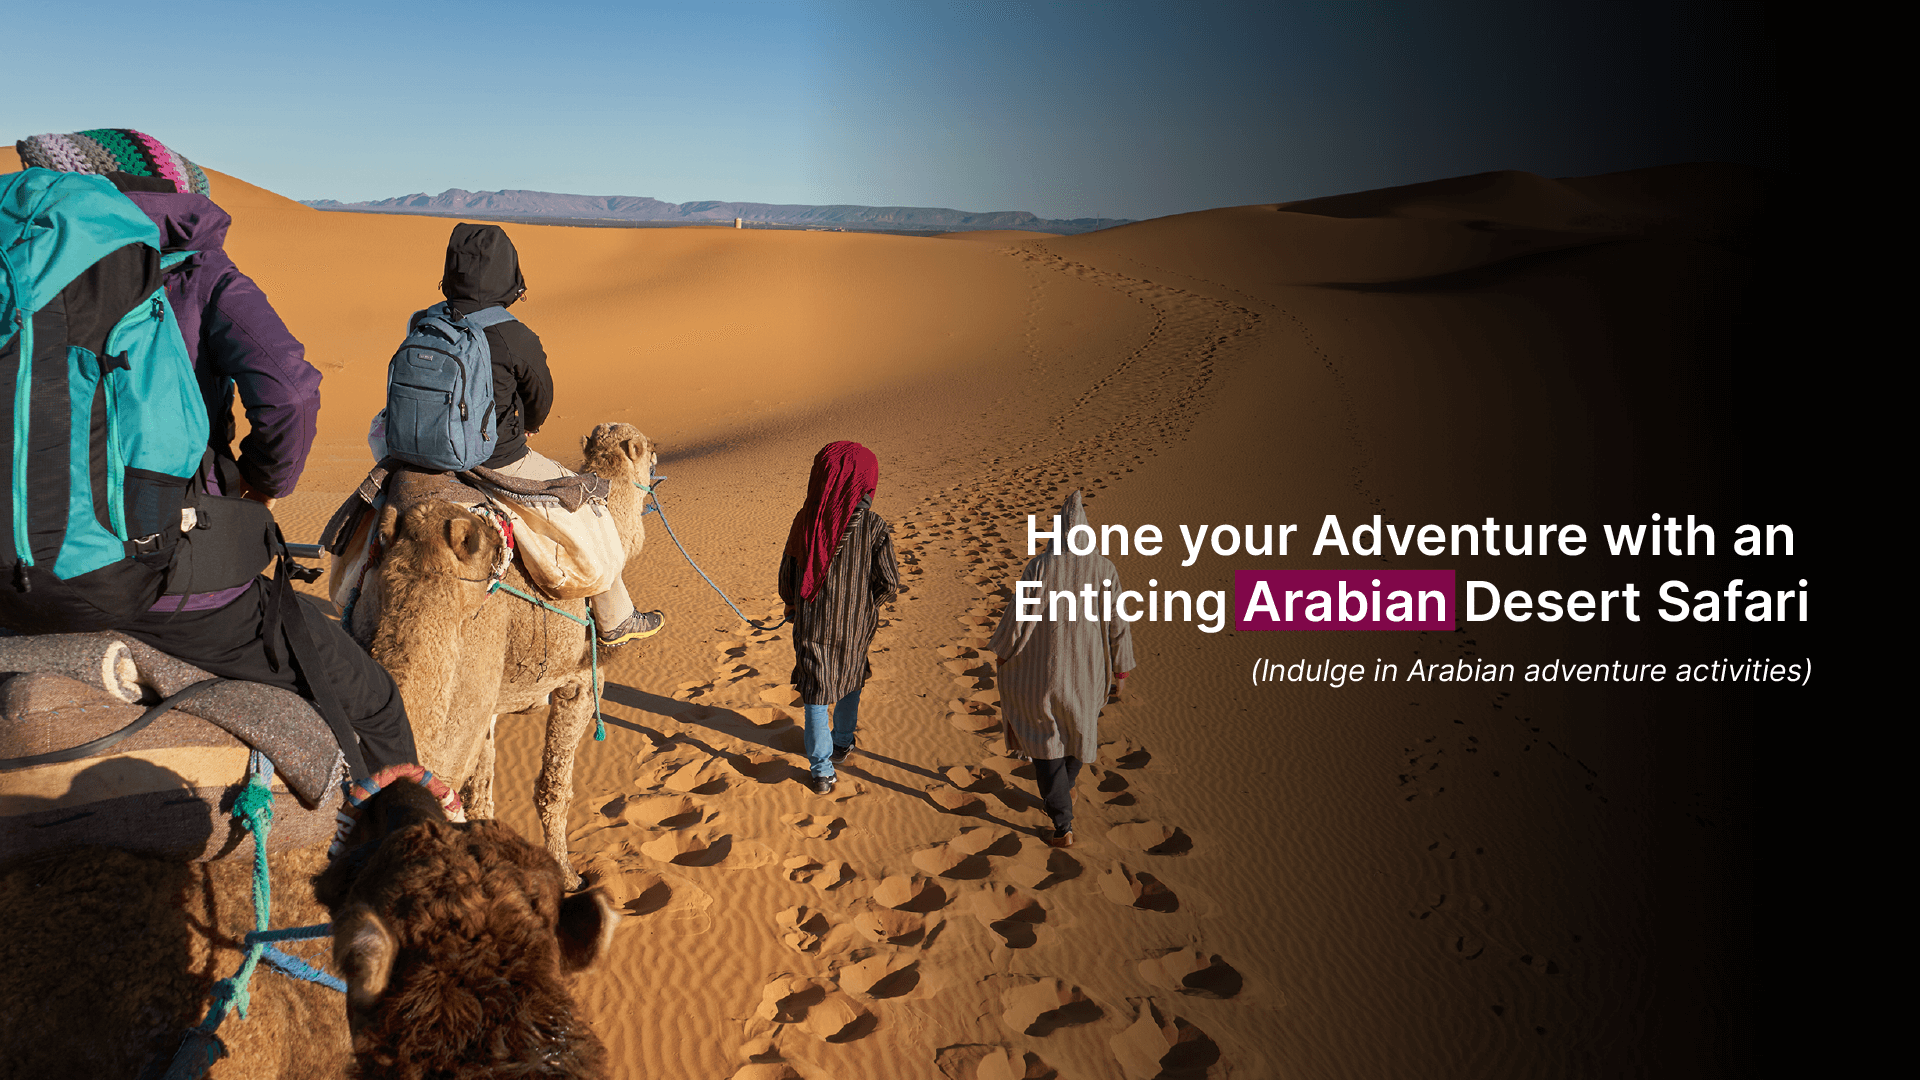 Hone Your Adventure with an Enticing Arabian Desert Safari